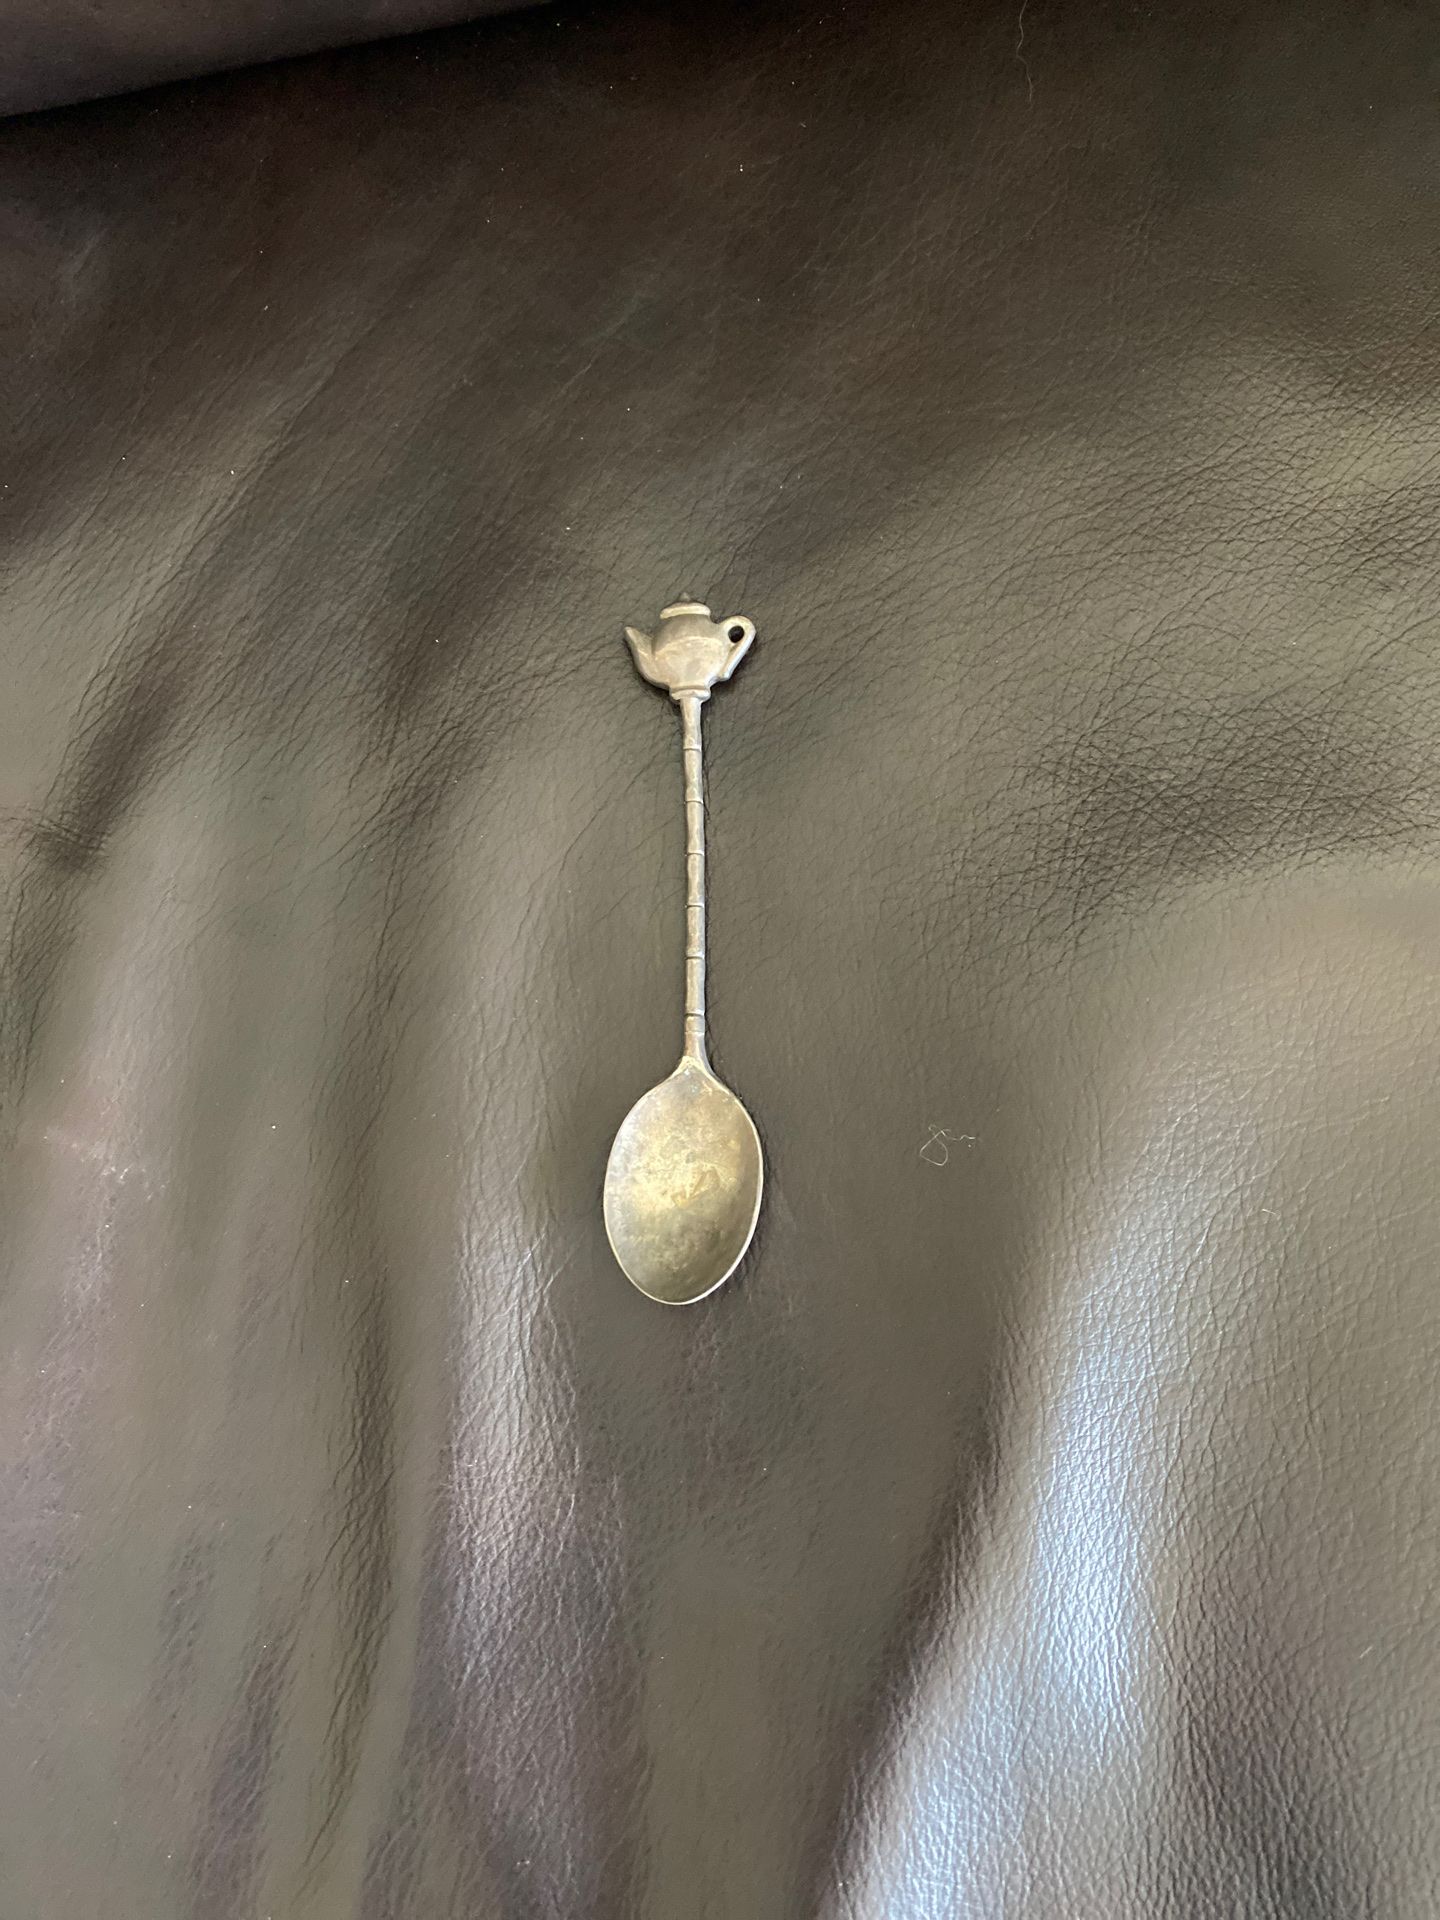 Sterling silver teaspoon